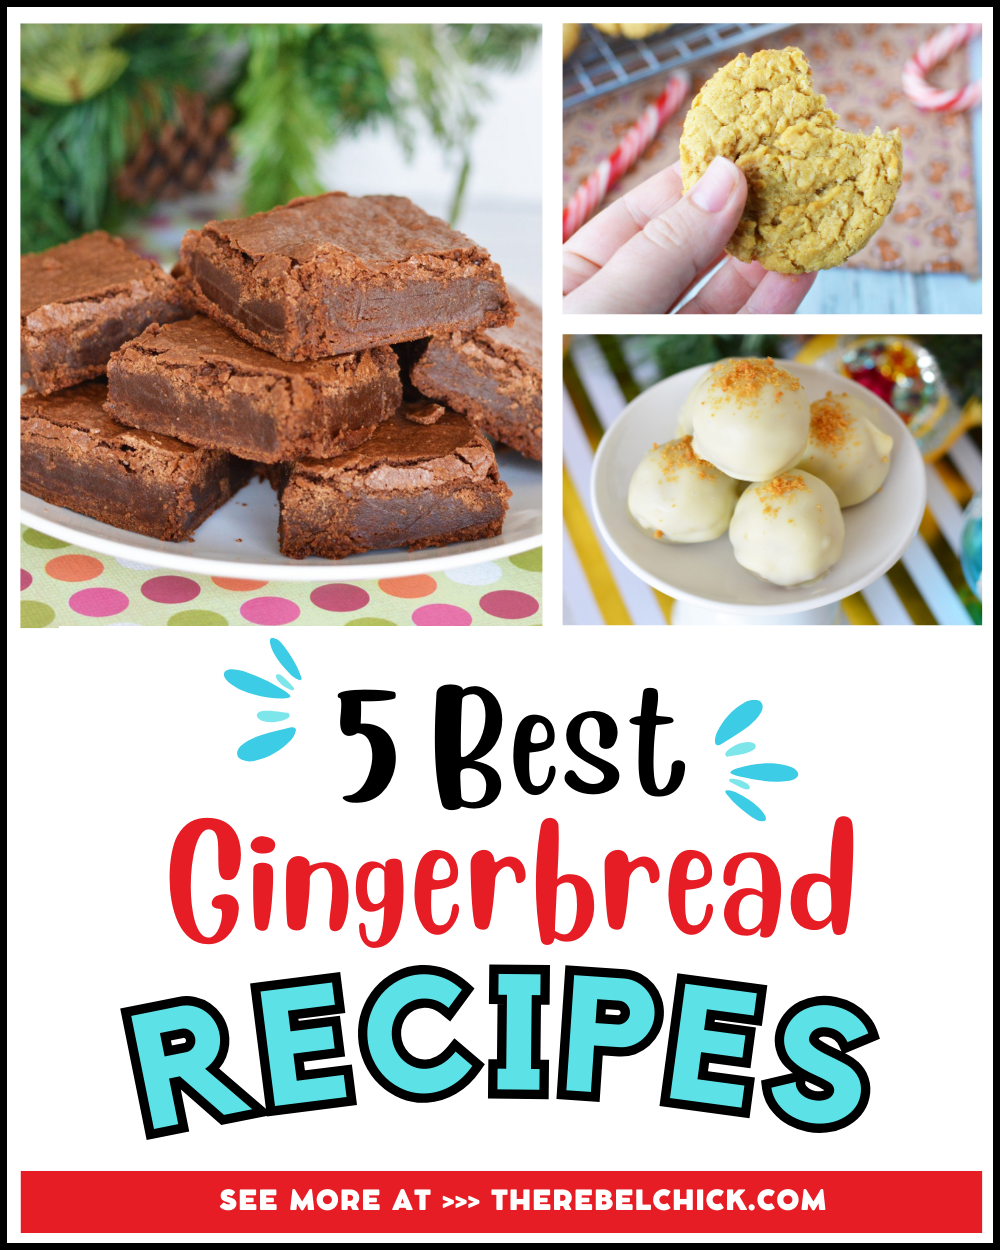 5 Best Gingerbread Recipes